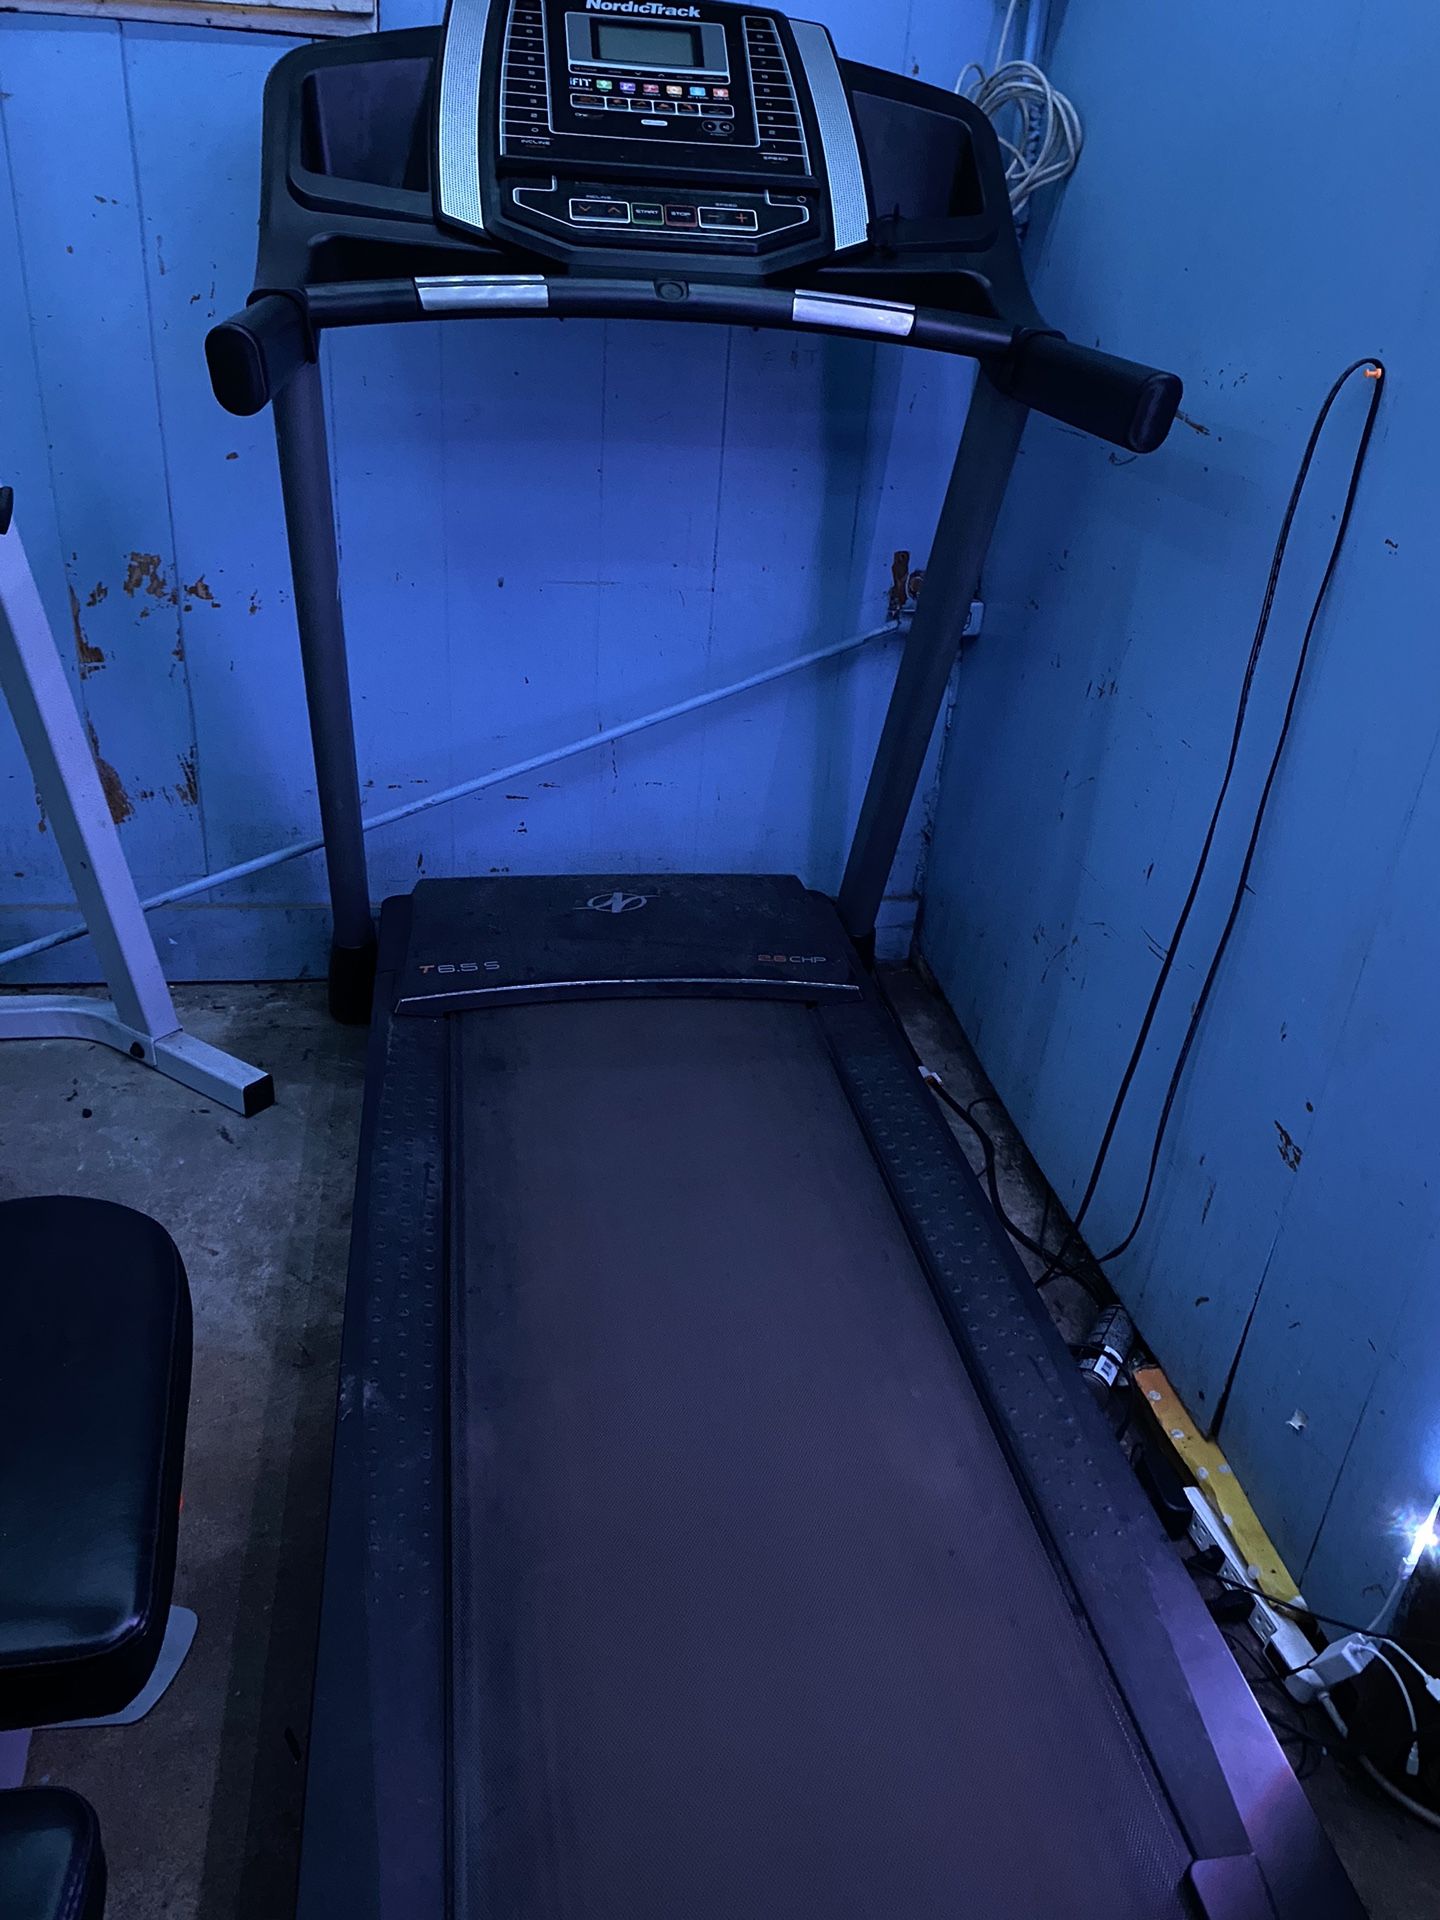  Nordictrack Treadmill 